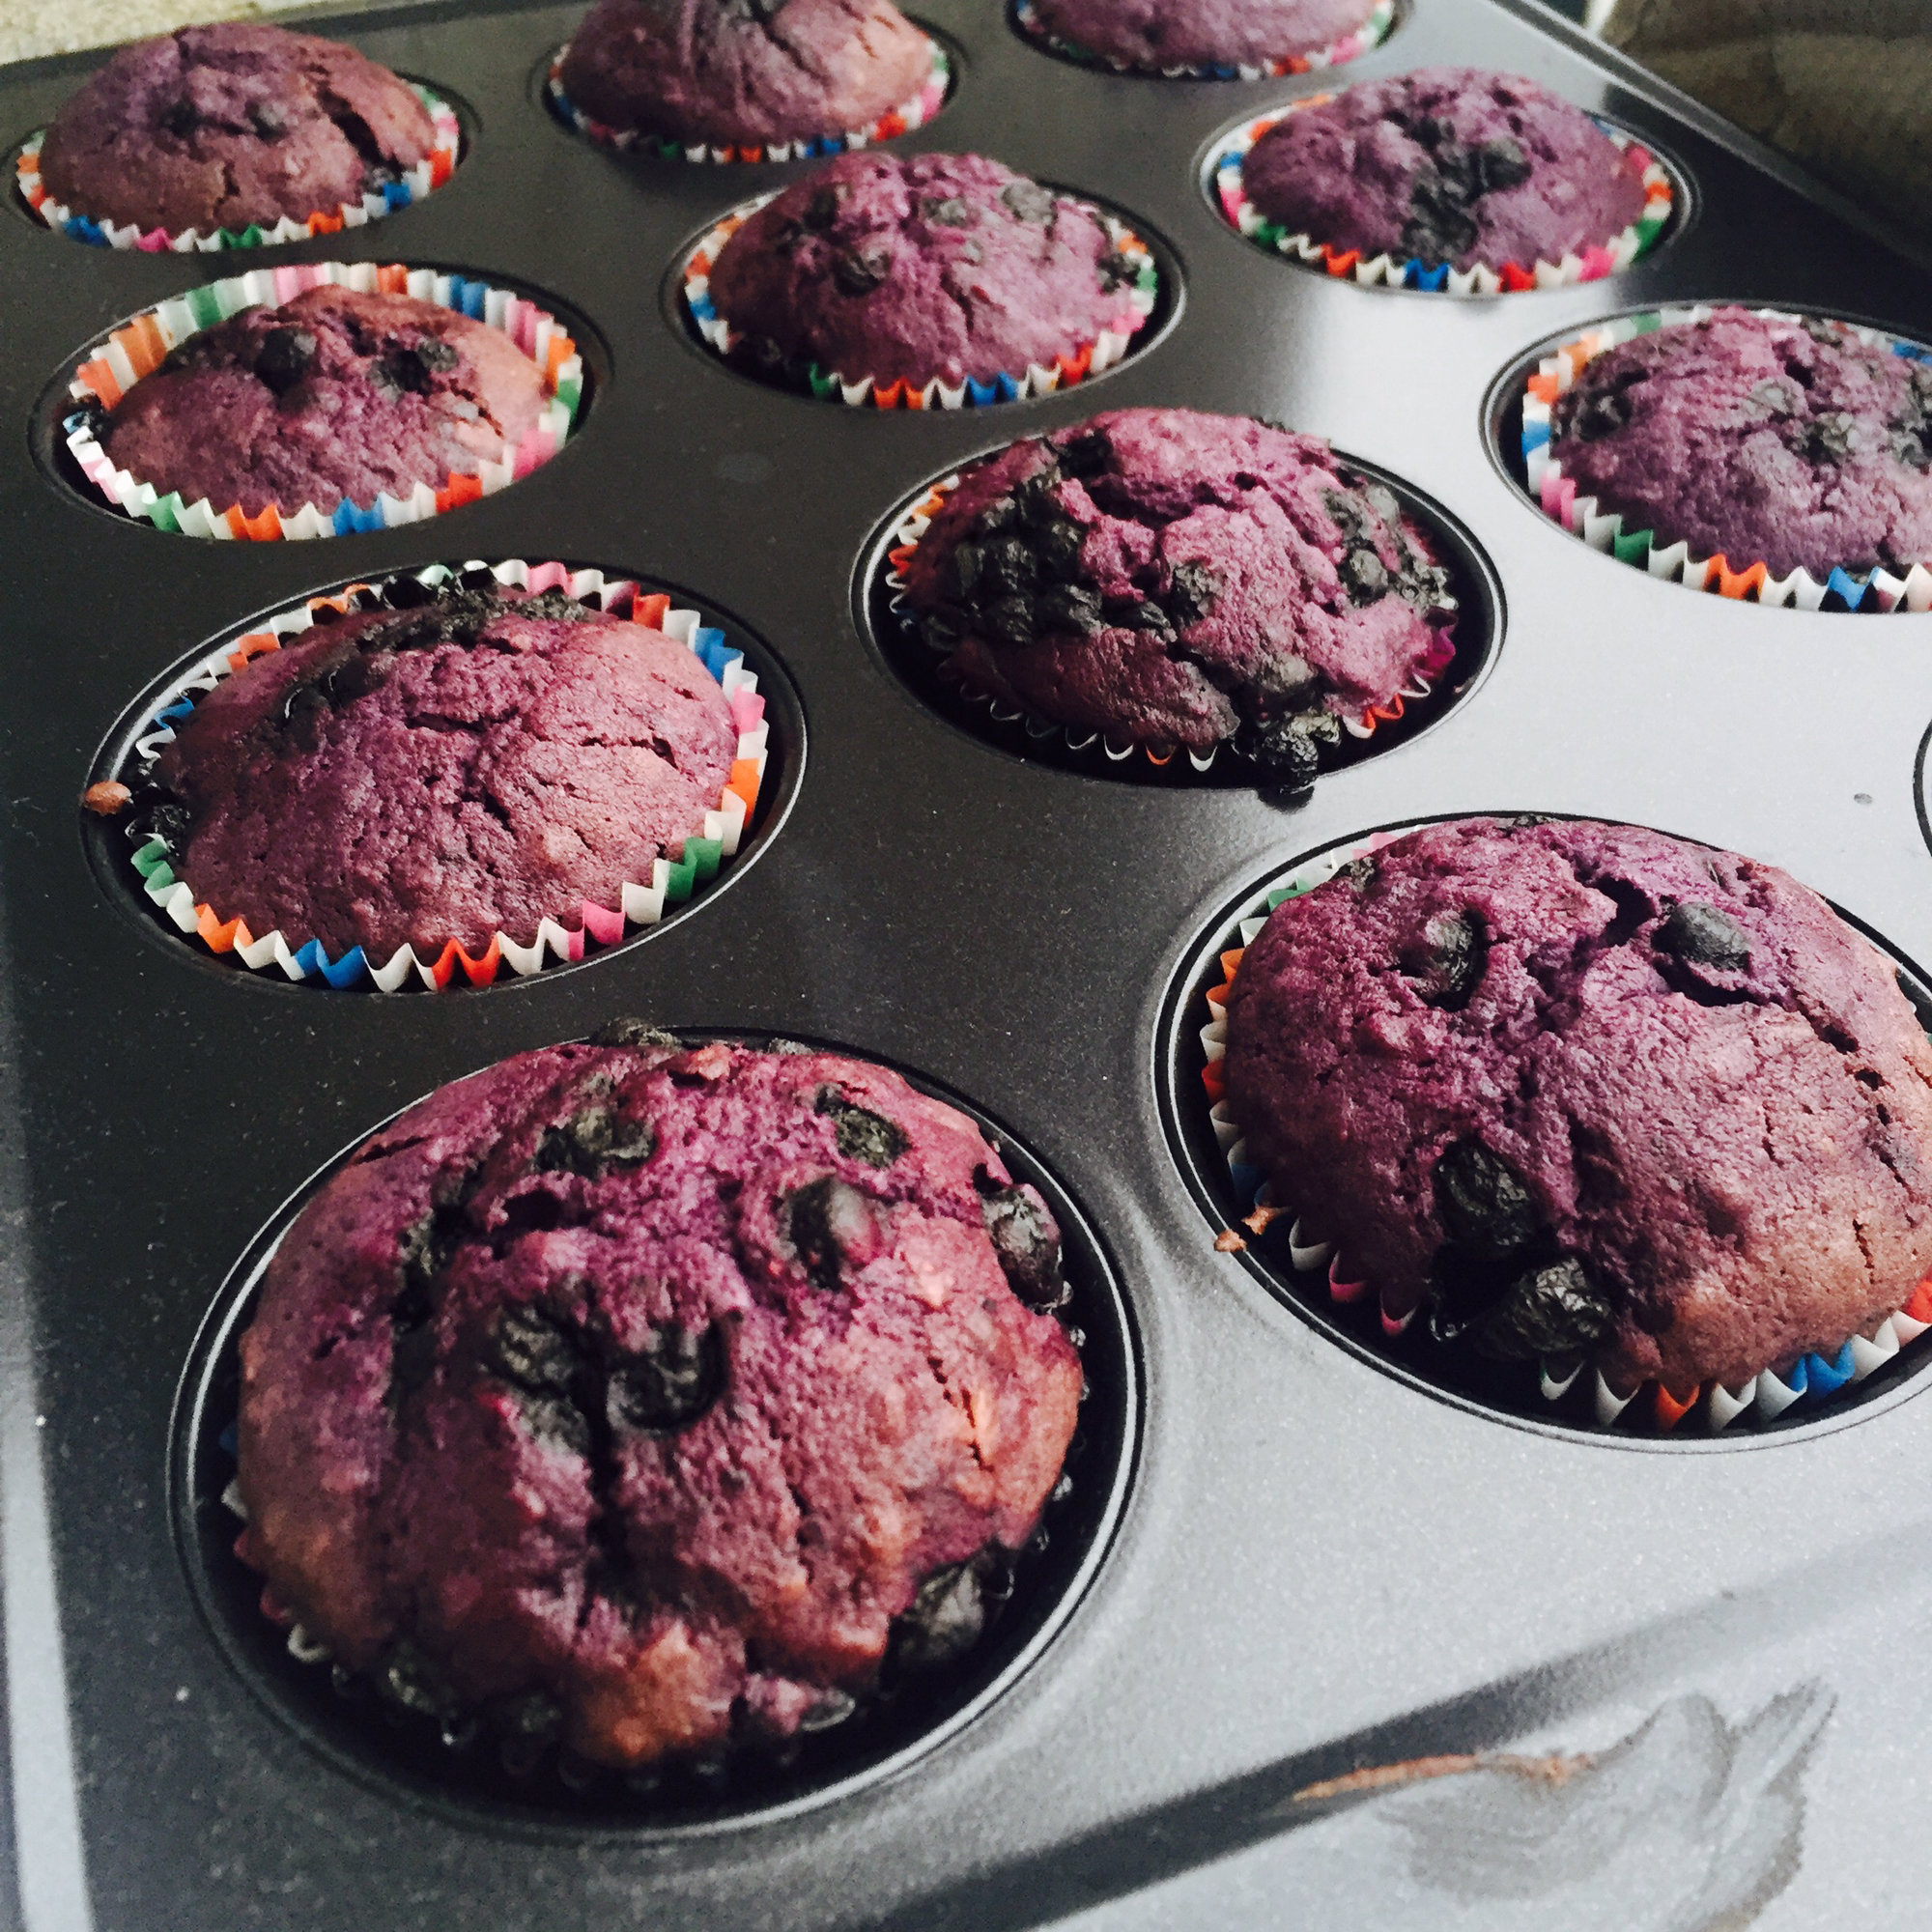 Blueberry Muffins II 